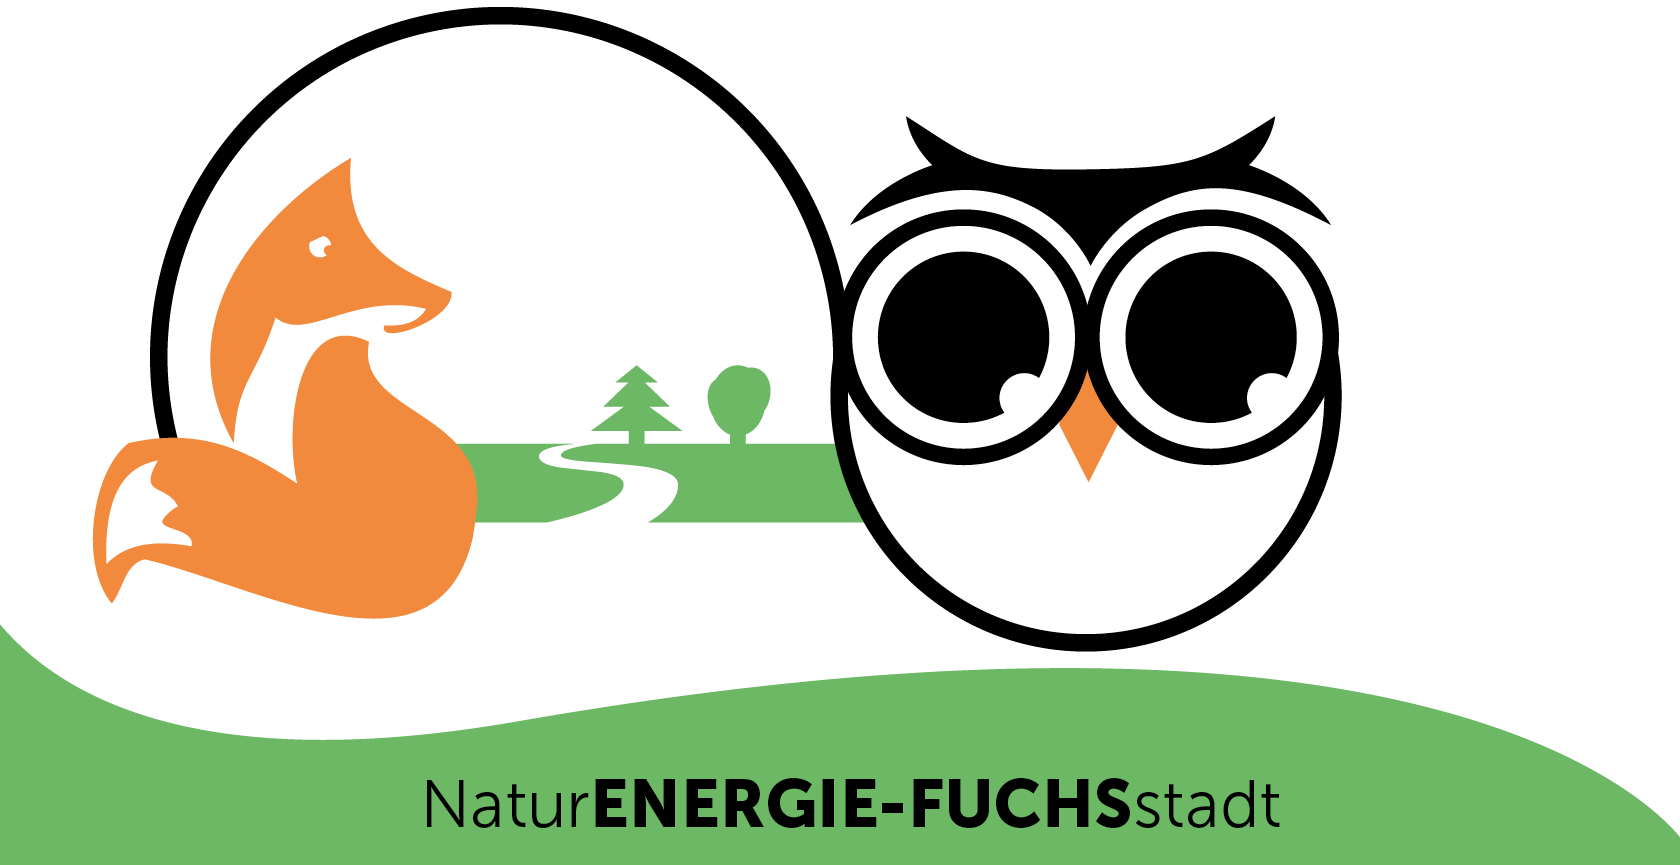 naturENERGIE-FUCHSstadt